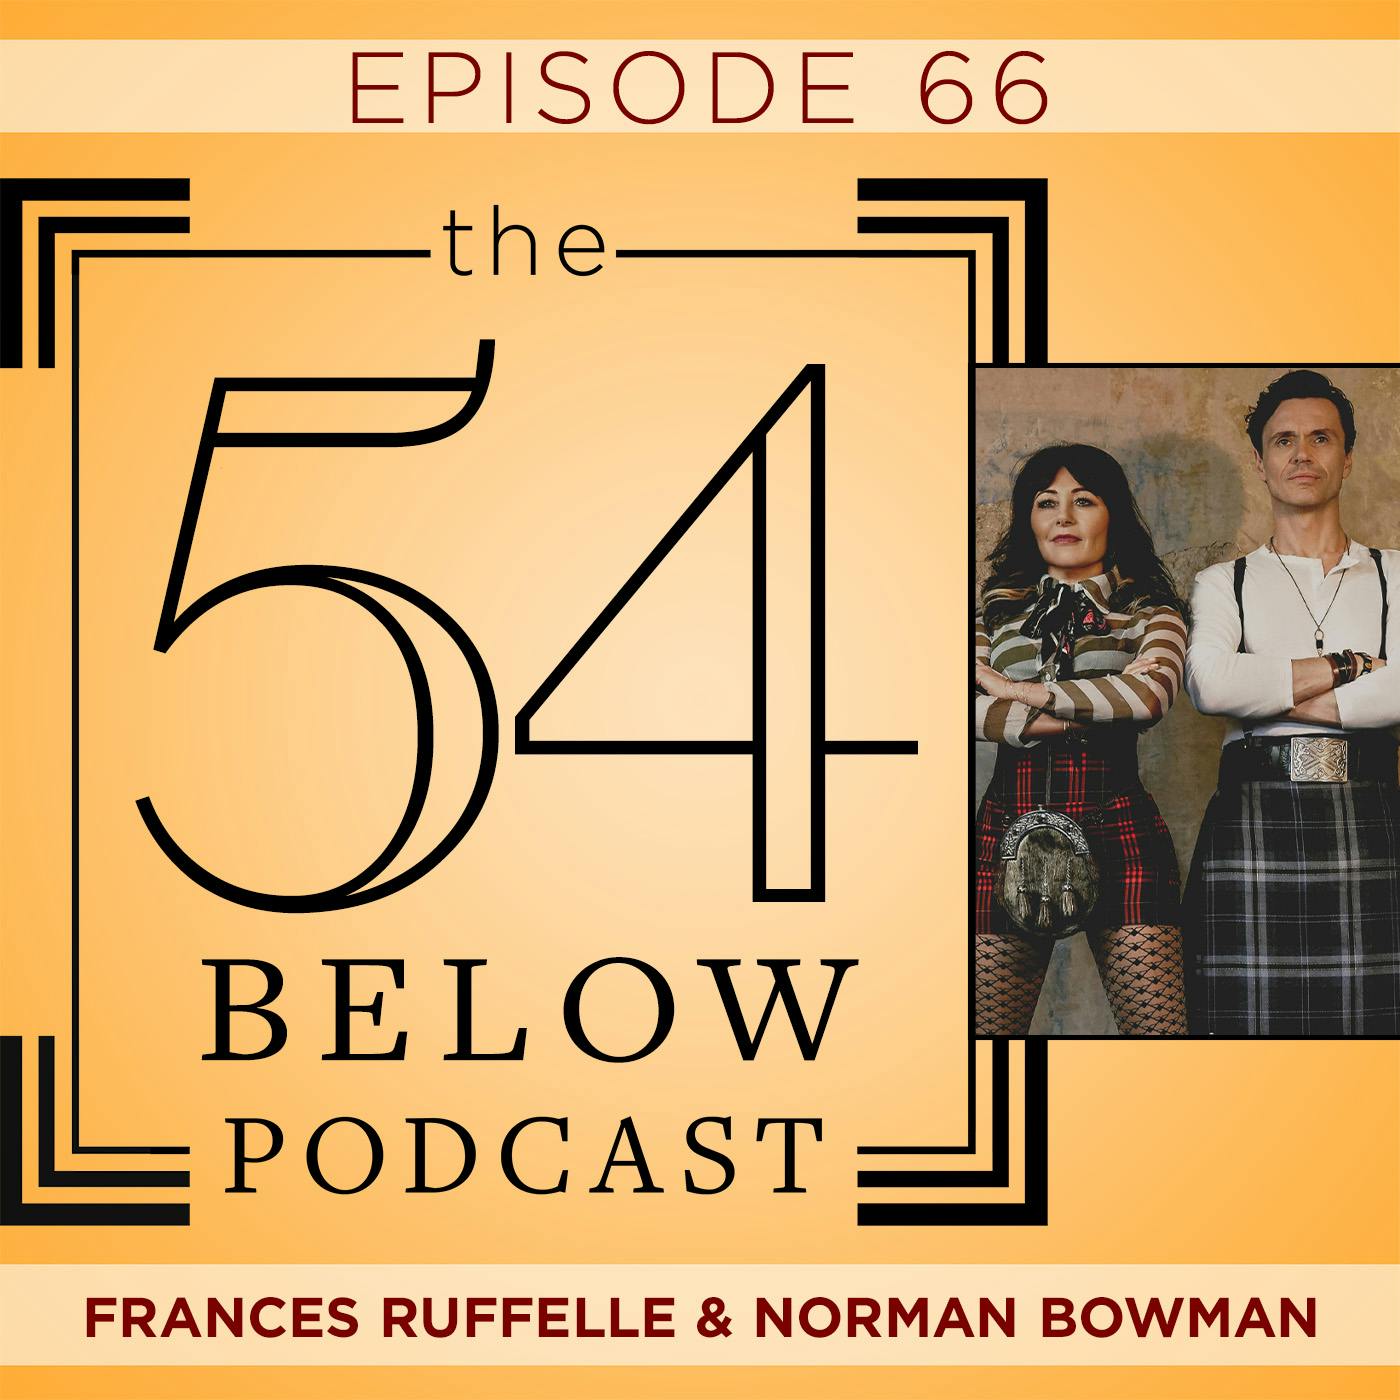 Episode 66: FRANCES RUFFELLE & NORMAN BOWMAN